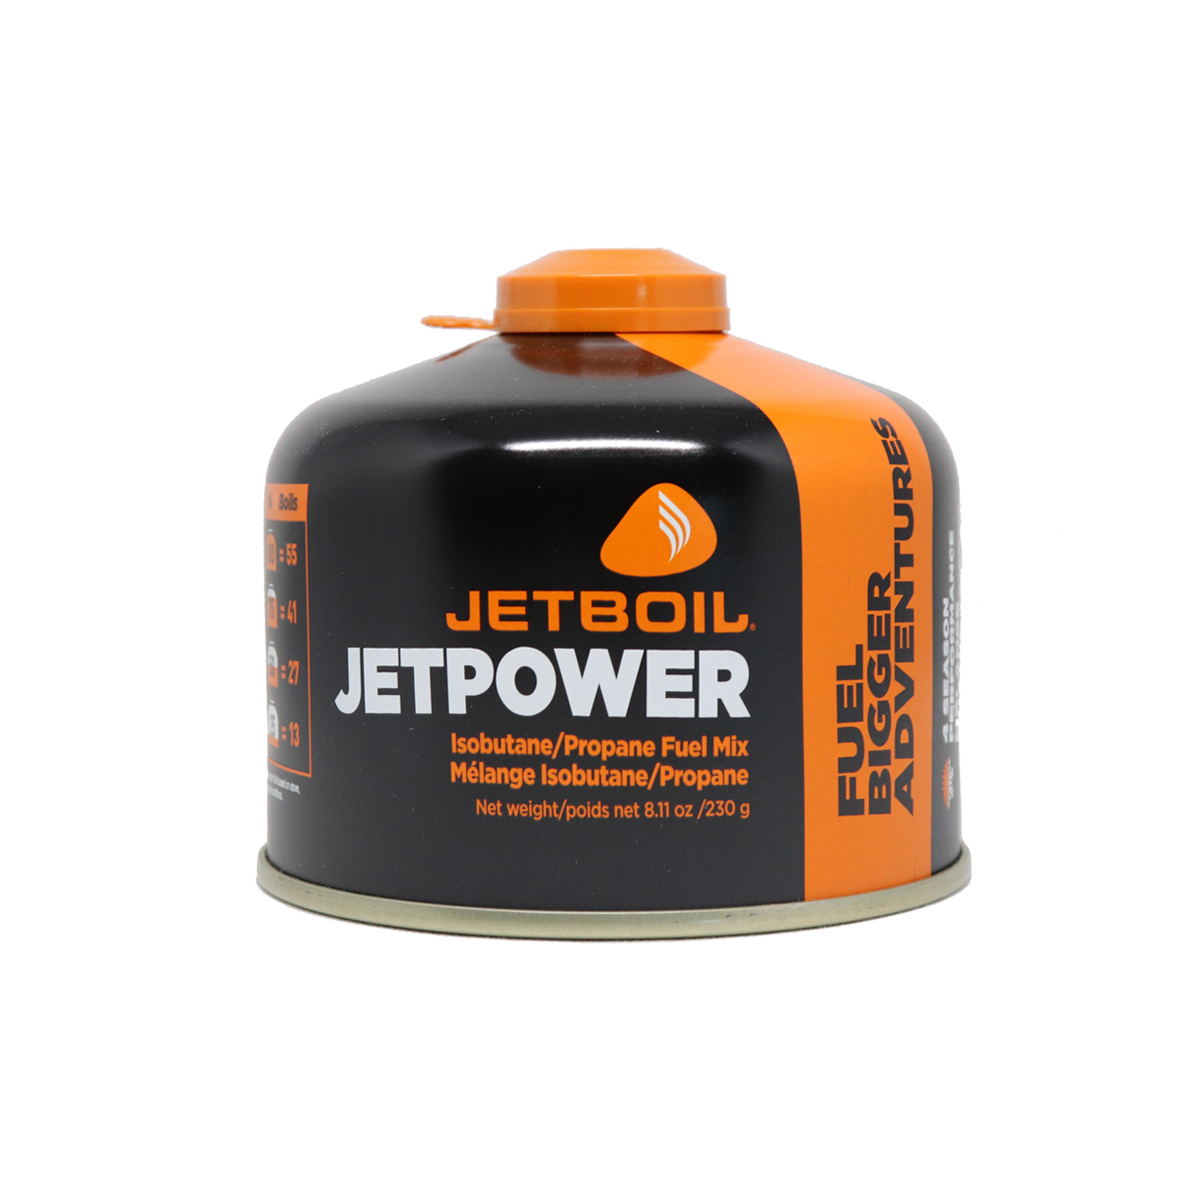 Jetboil Jetpower Fuel - Fuel cartridge